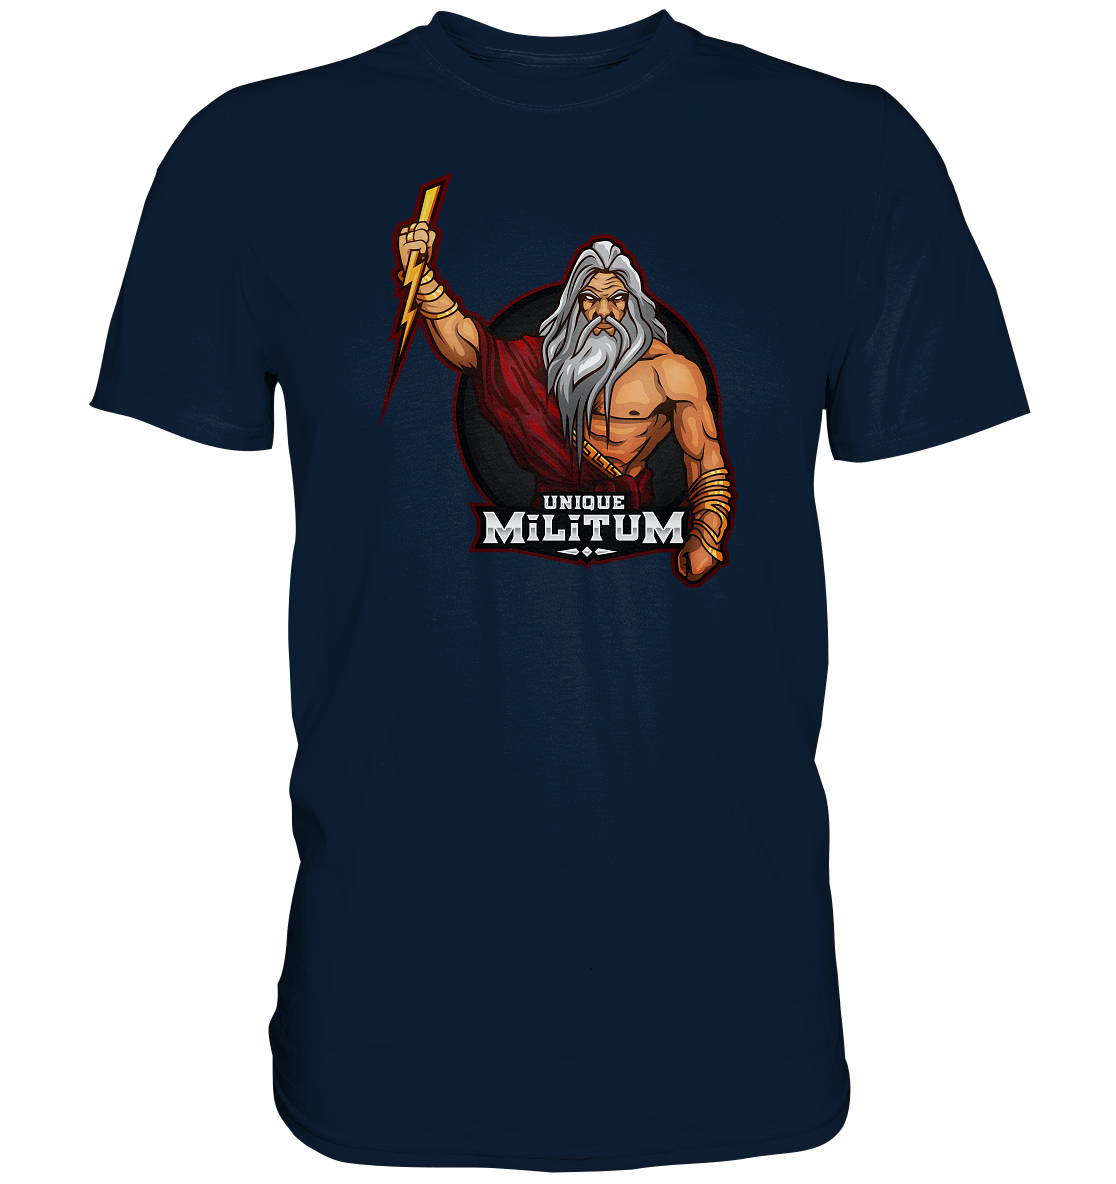 UNIQUE MILITUM - Basic Shirt